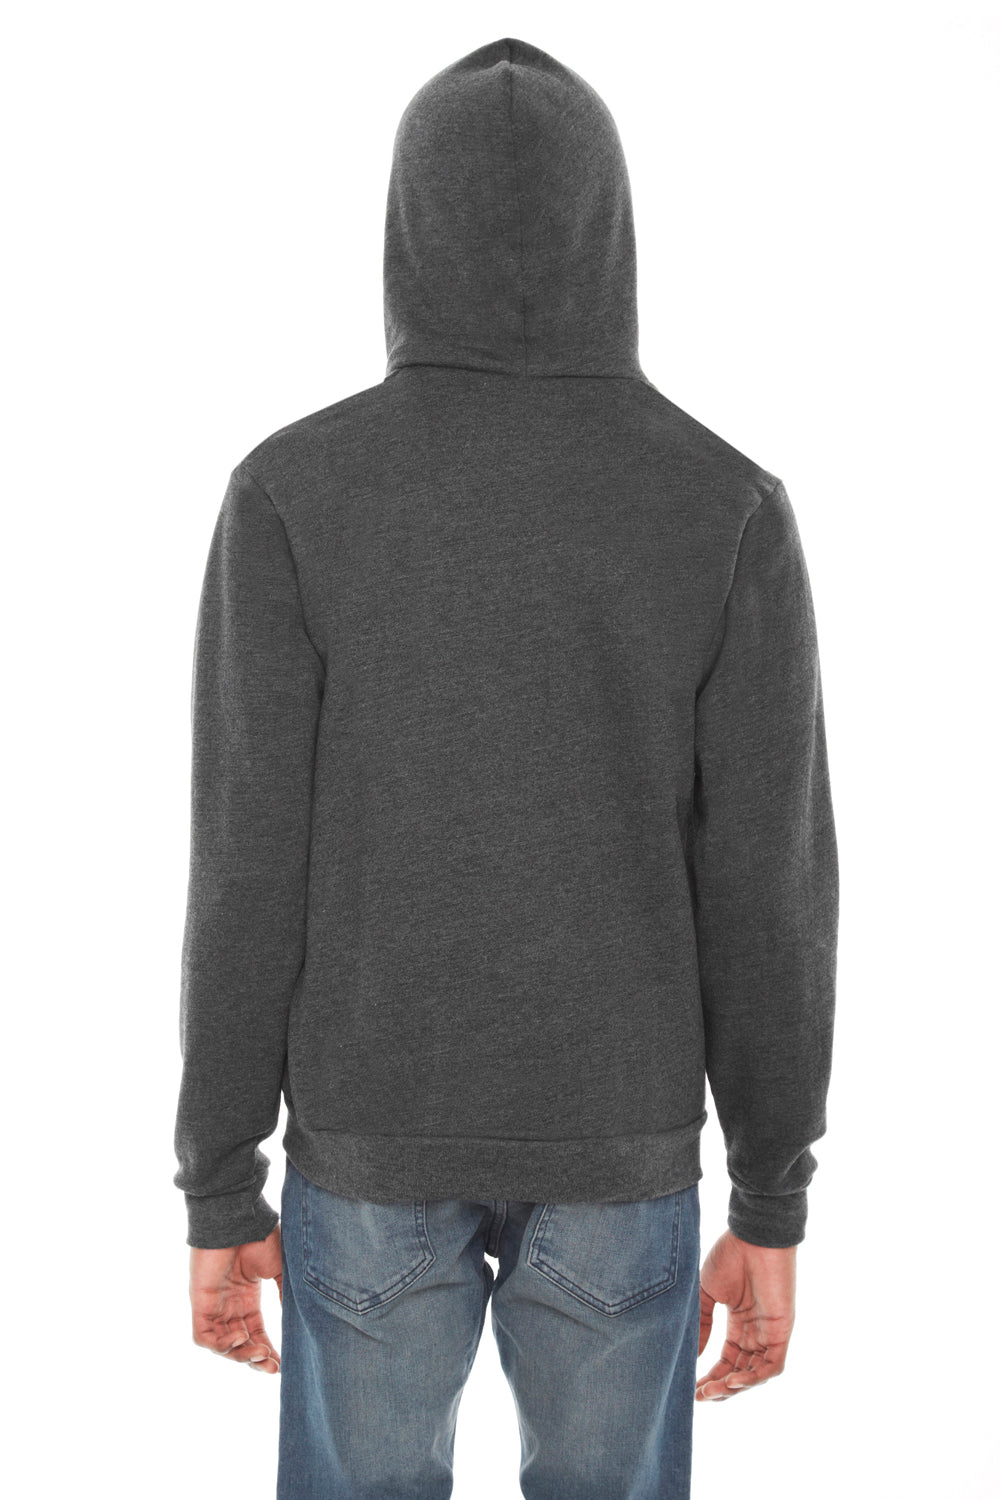 American Apparel F497W Mens Flex Fleece Full Zip Hooded Sweatshirt Hoodie Heather Dark Grey Back